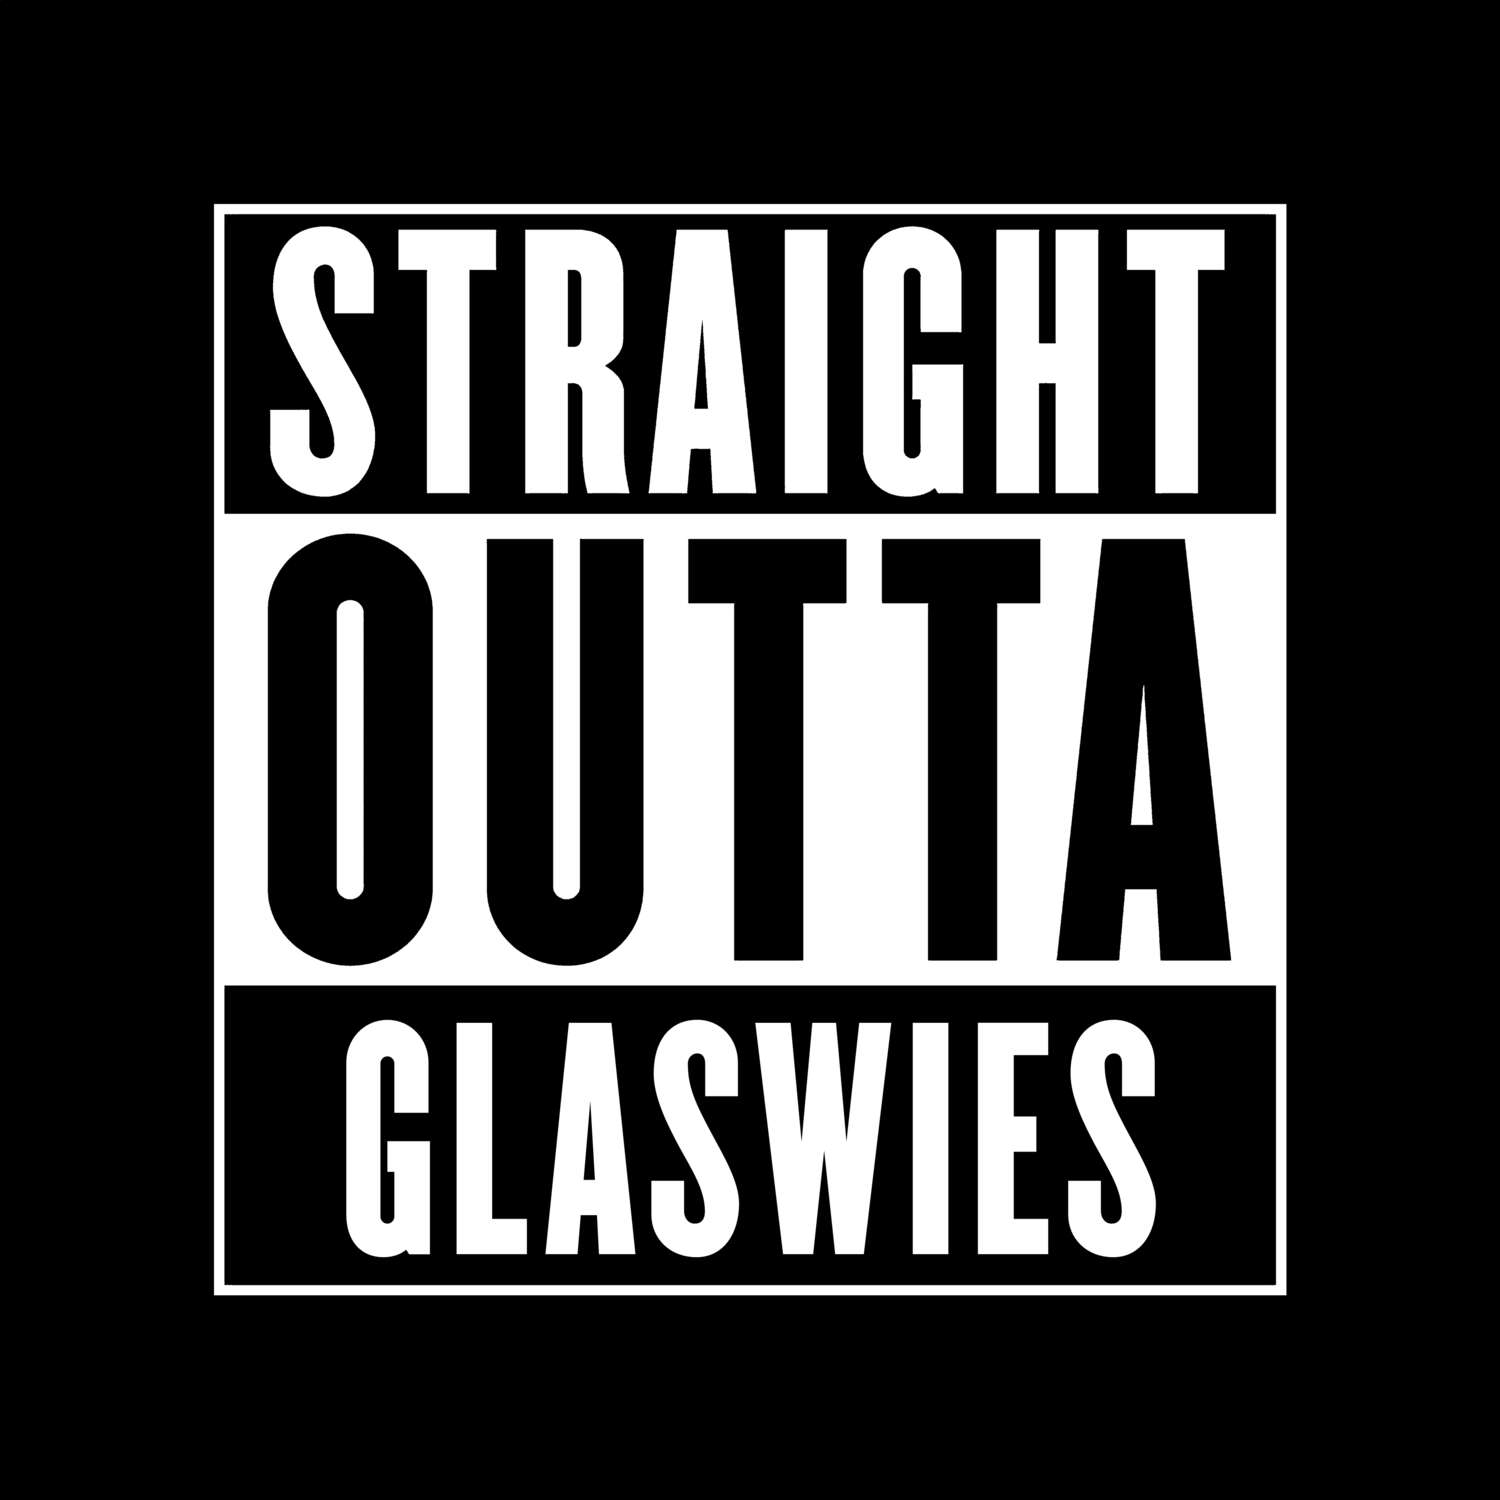 Glaswies T-Shirt »Straight Outta«